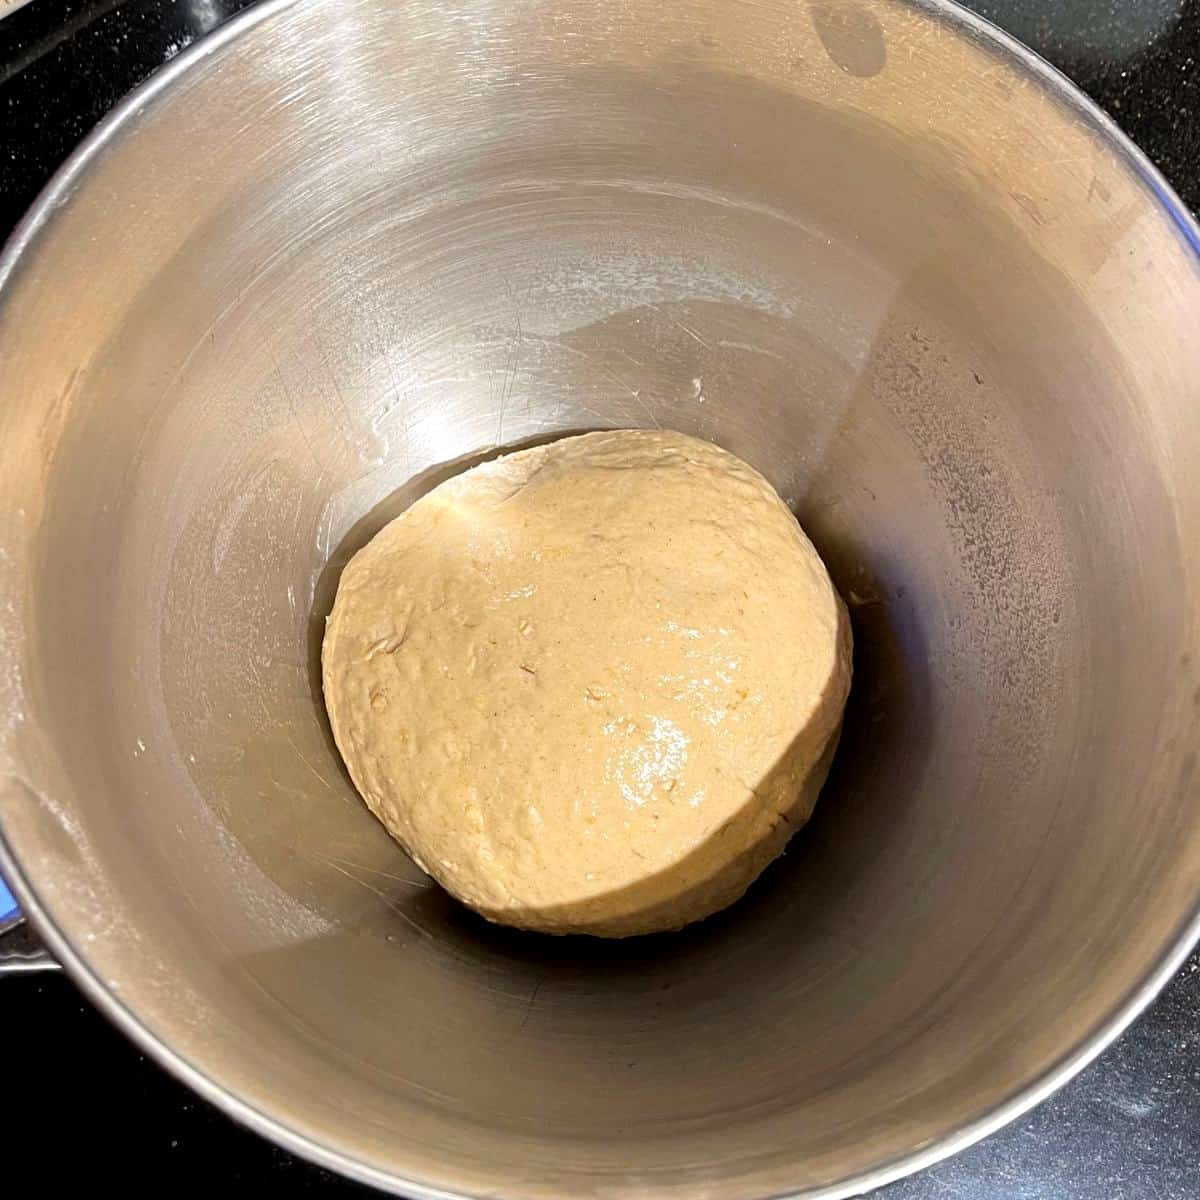 Kneaded dough in bowl.